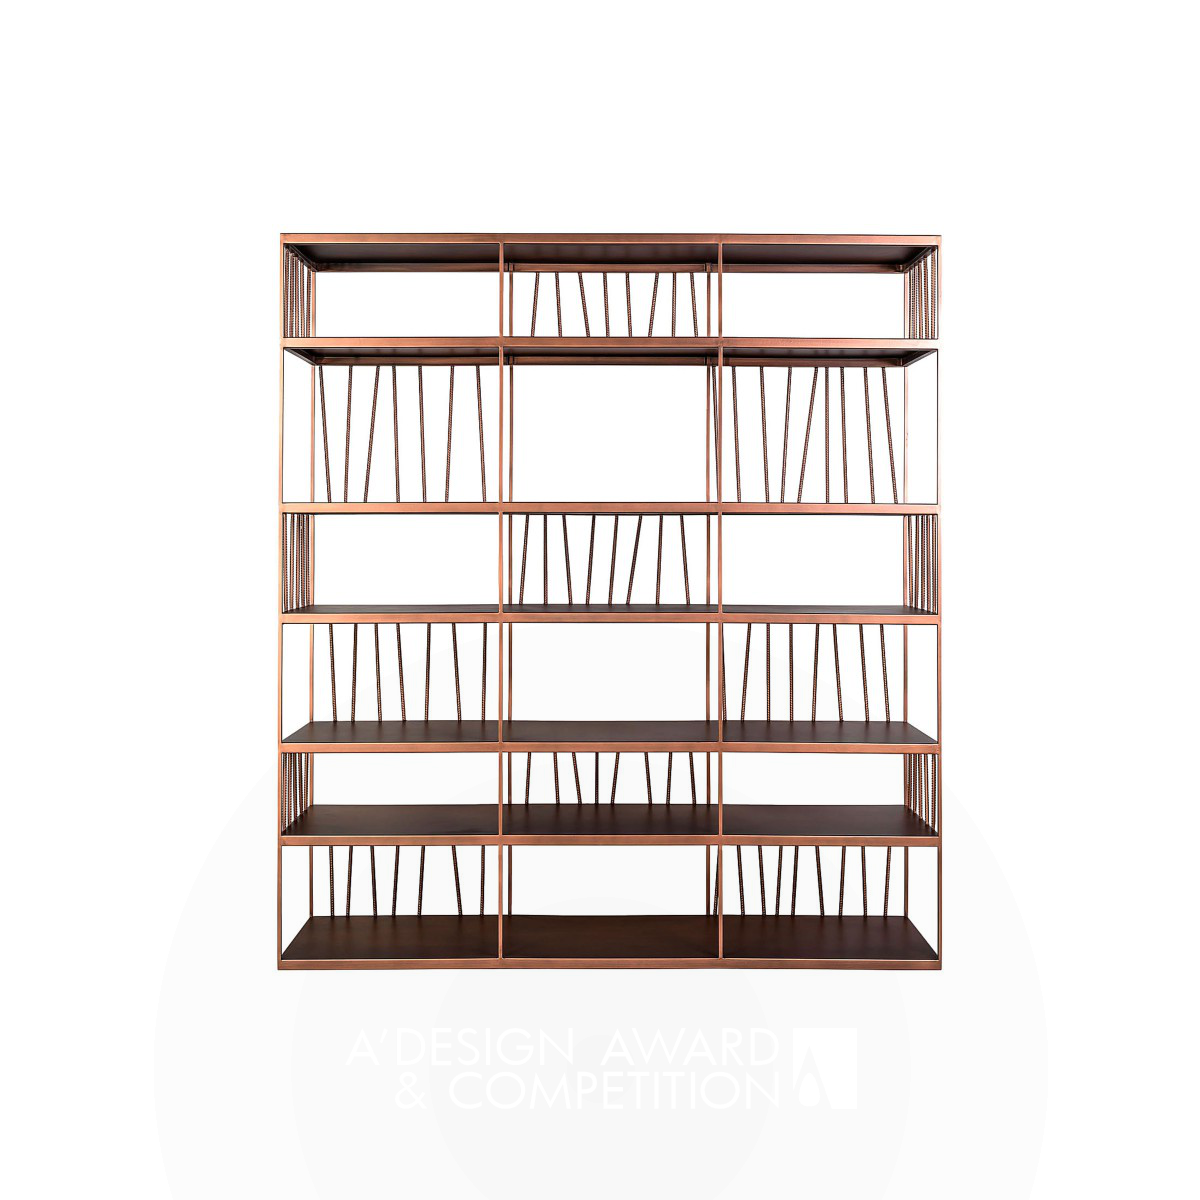 IRONMAN Bookshelf by SEBNEM BUHARA Silver Furniture Design Award Winner 2017 